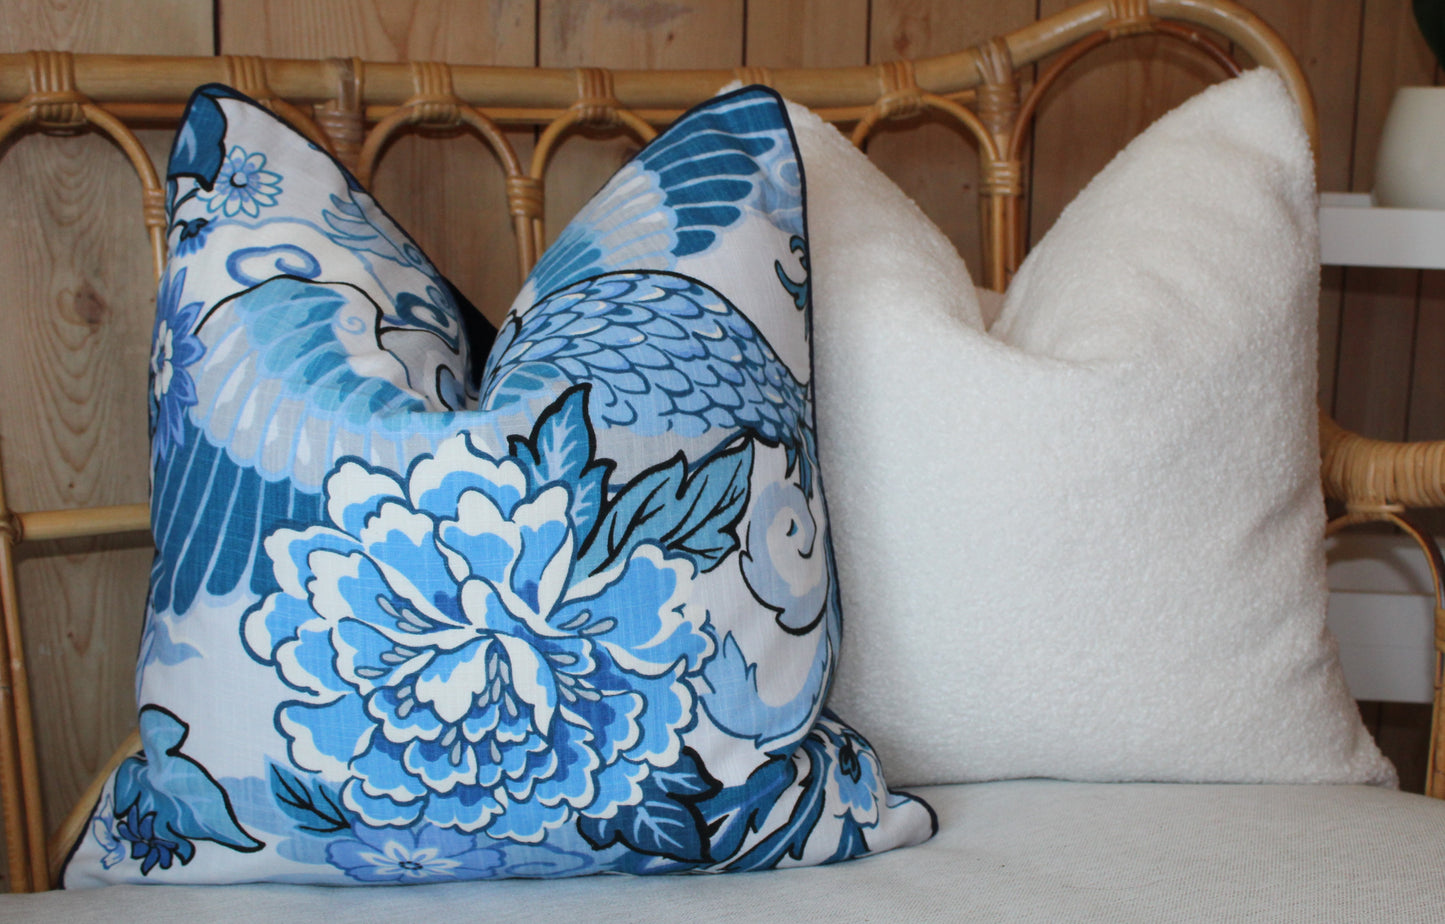 Lushan Garden Cushion covers